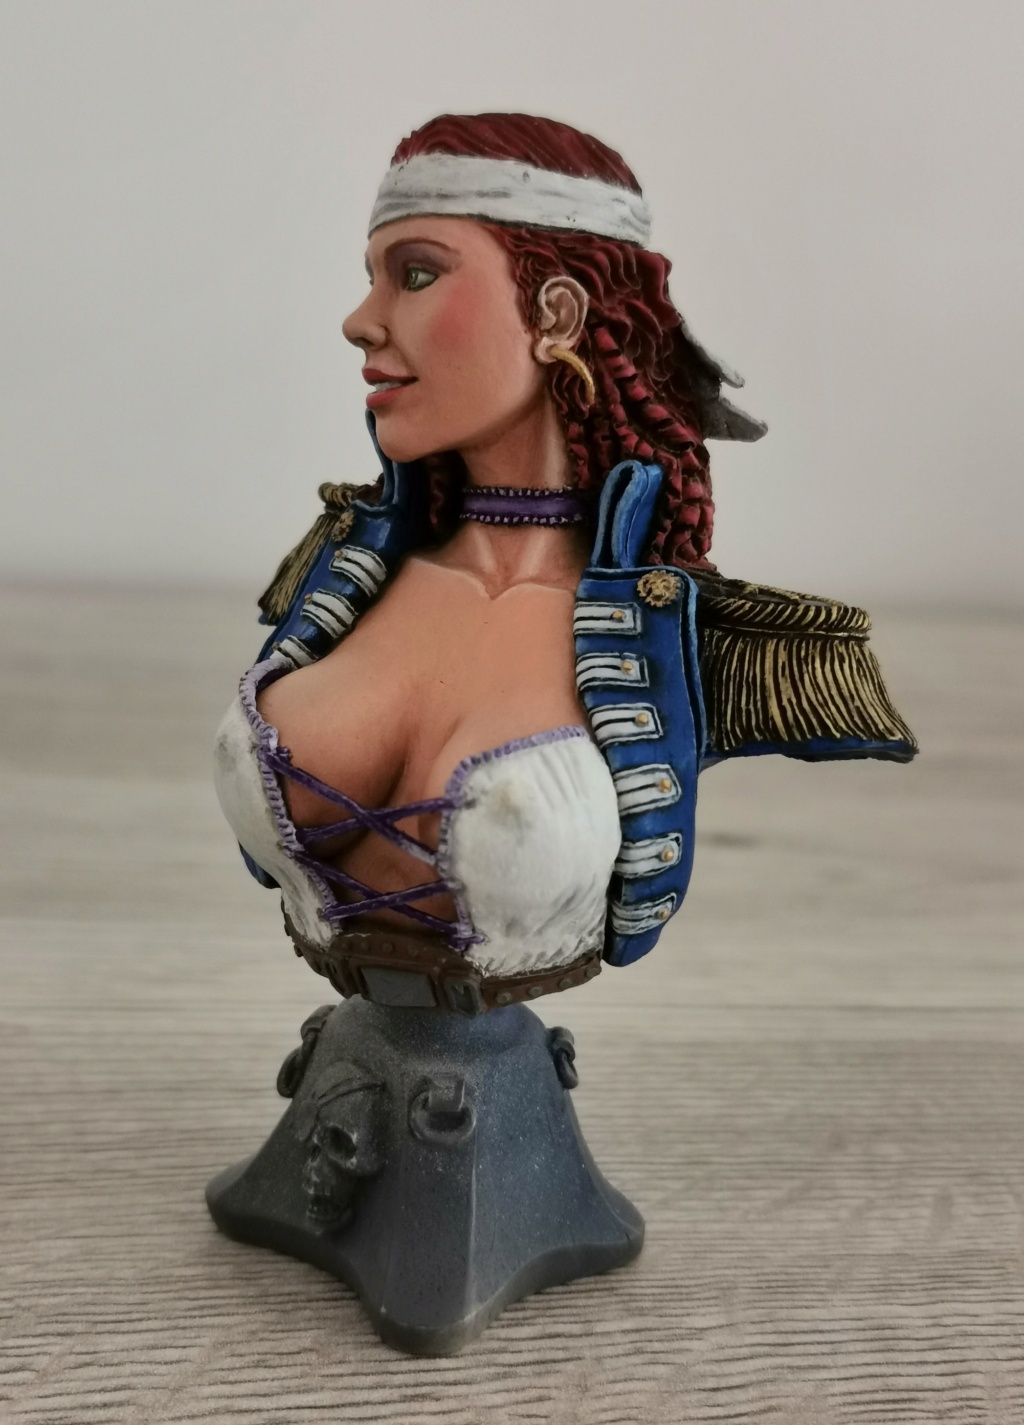 Femme de Pirate Img_2077